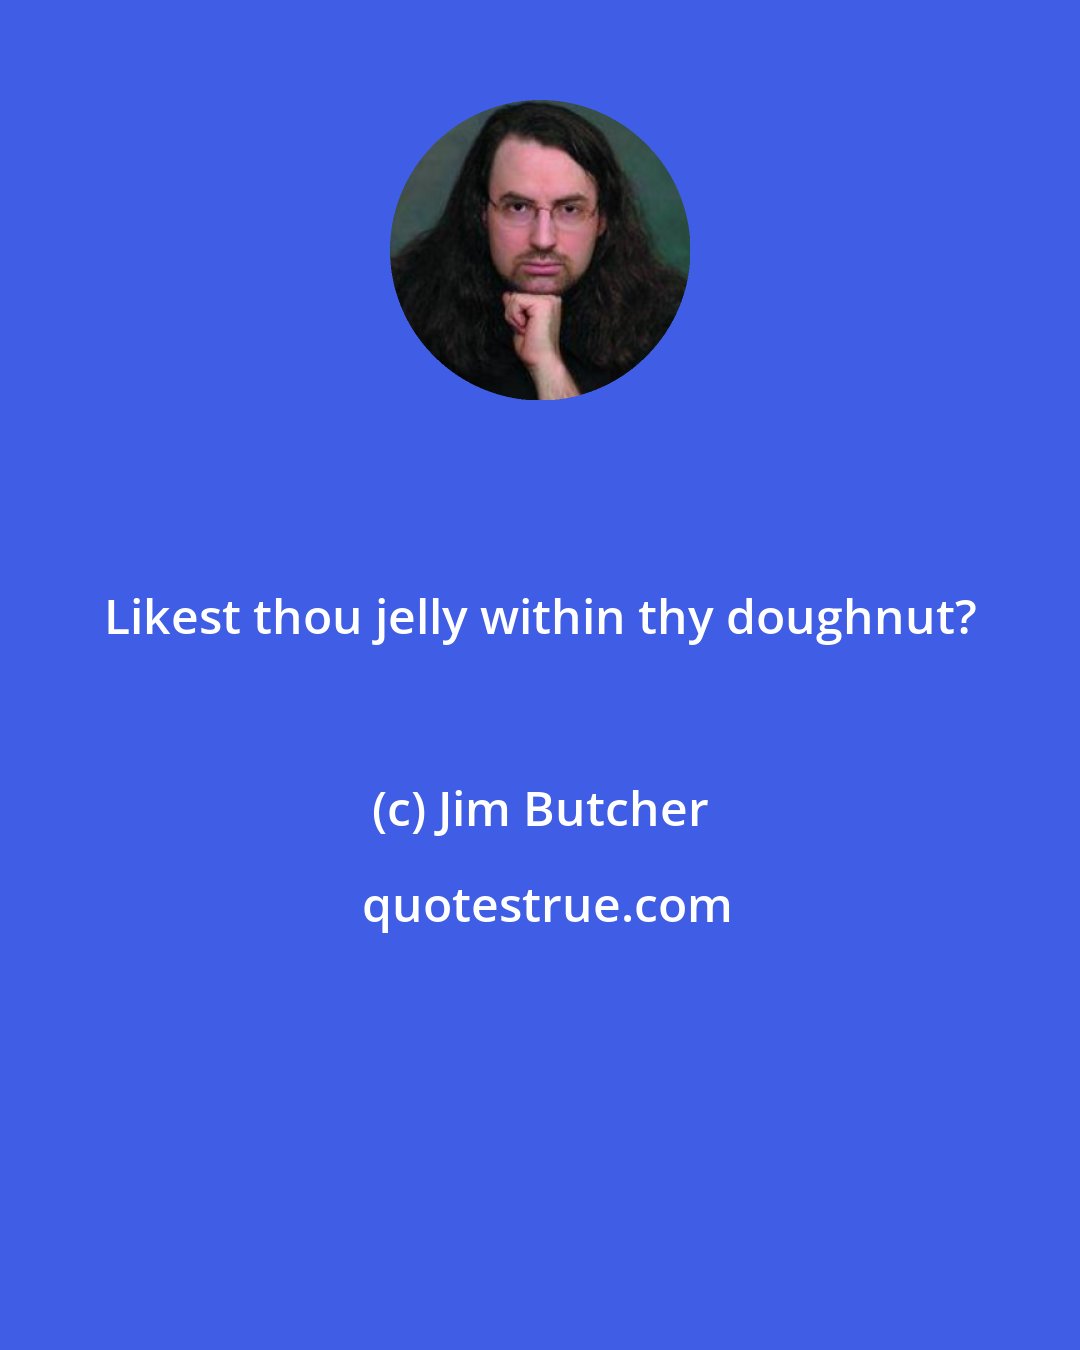 Jim Butcher: Likest thou jelly within thy doughnut?